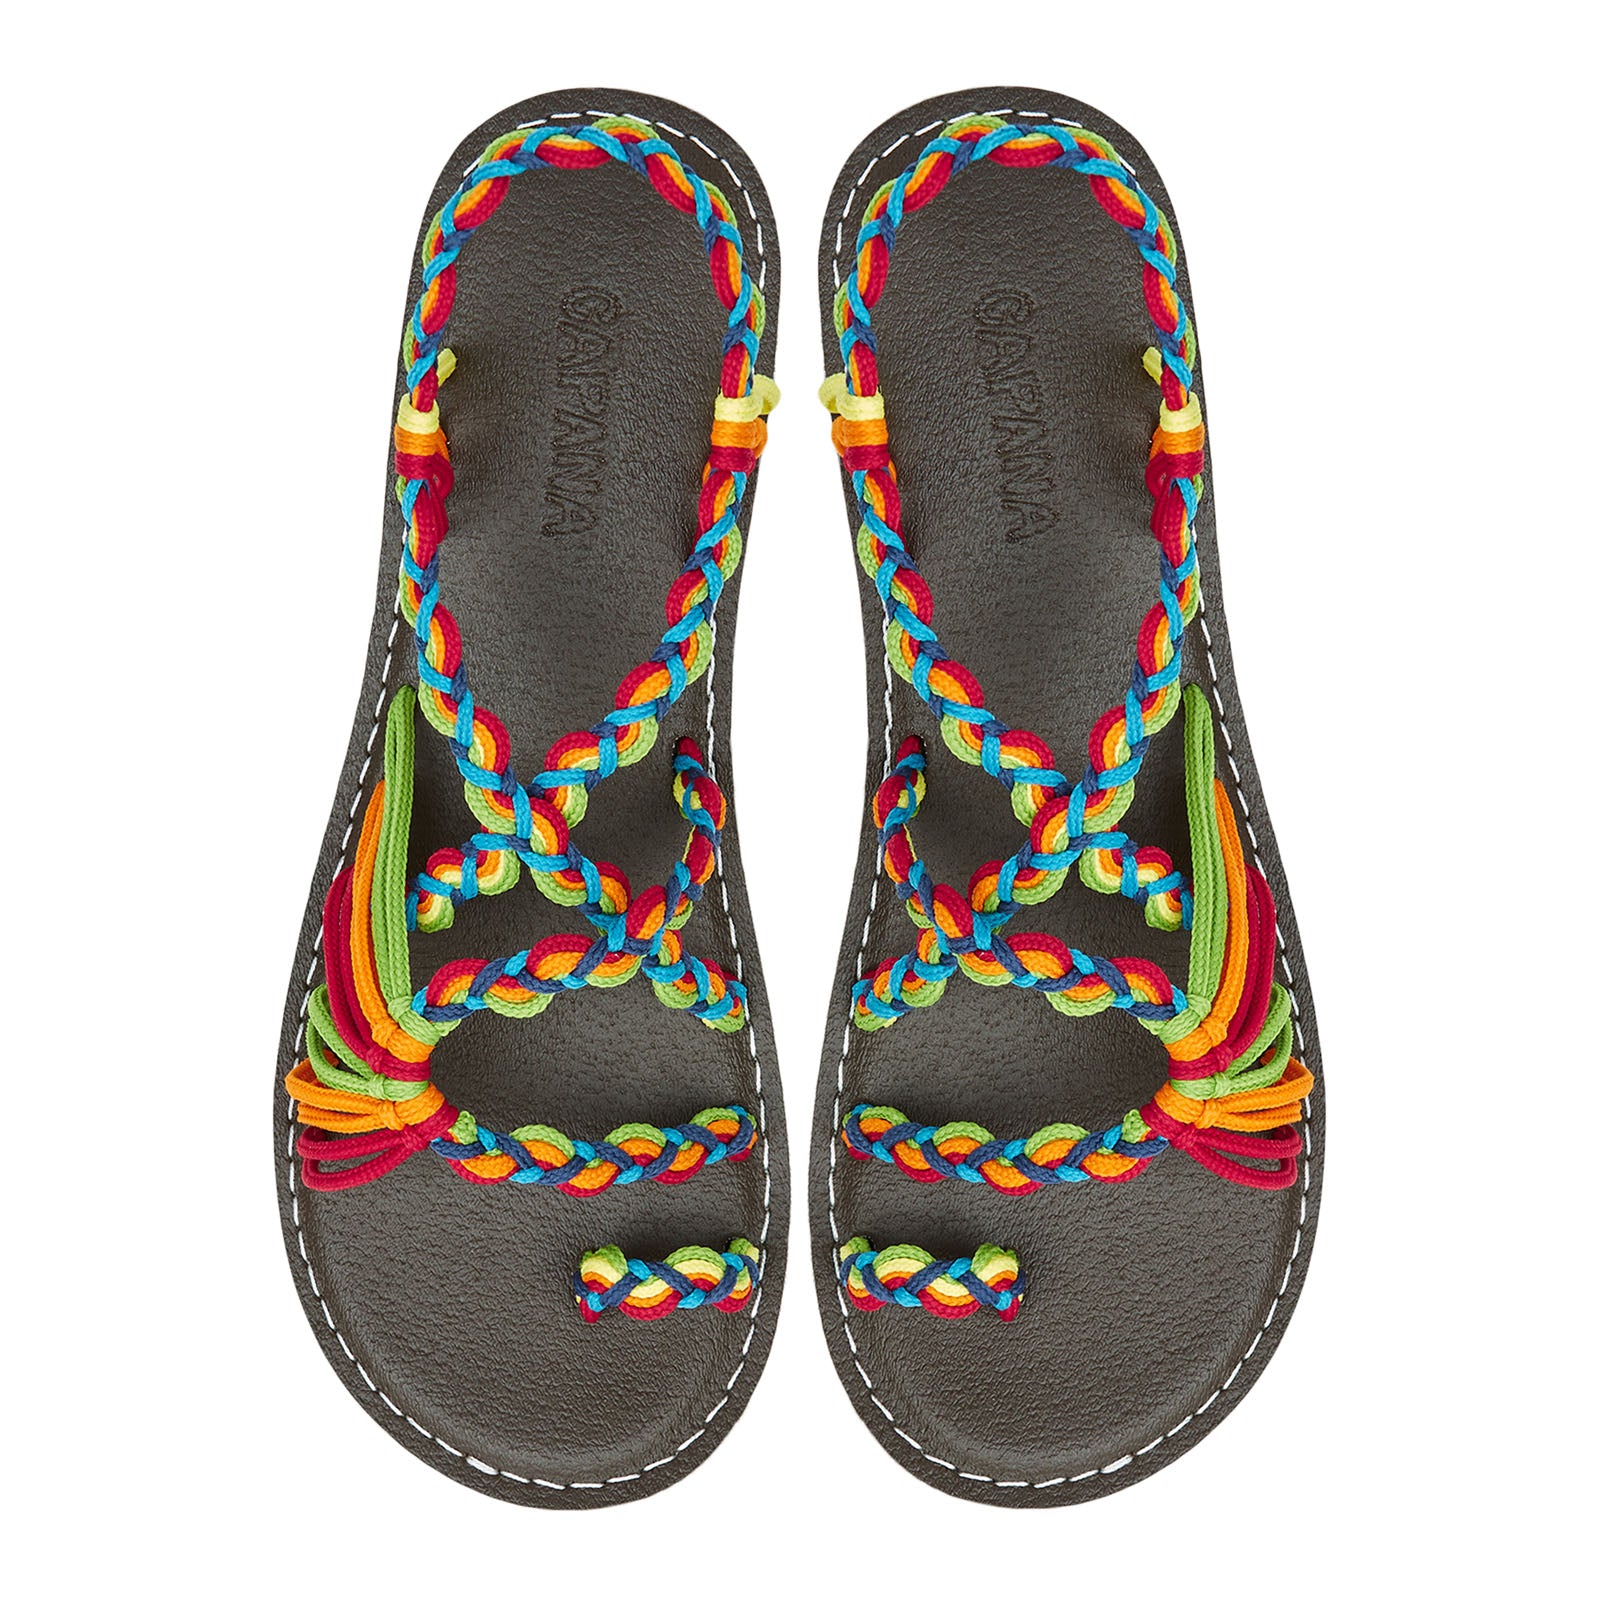 Commune Festive Rope Sandals Rainbow loop design Flat sandals for women